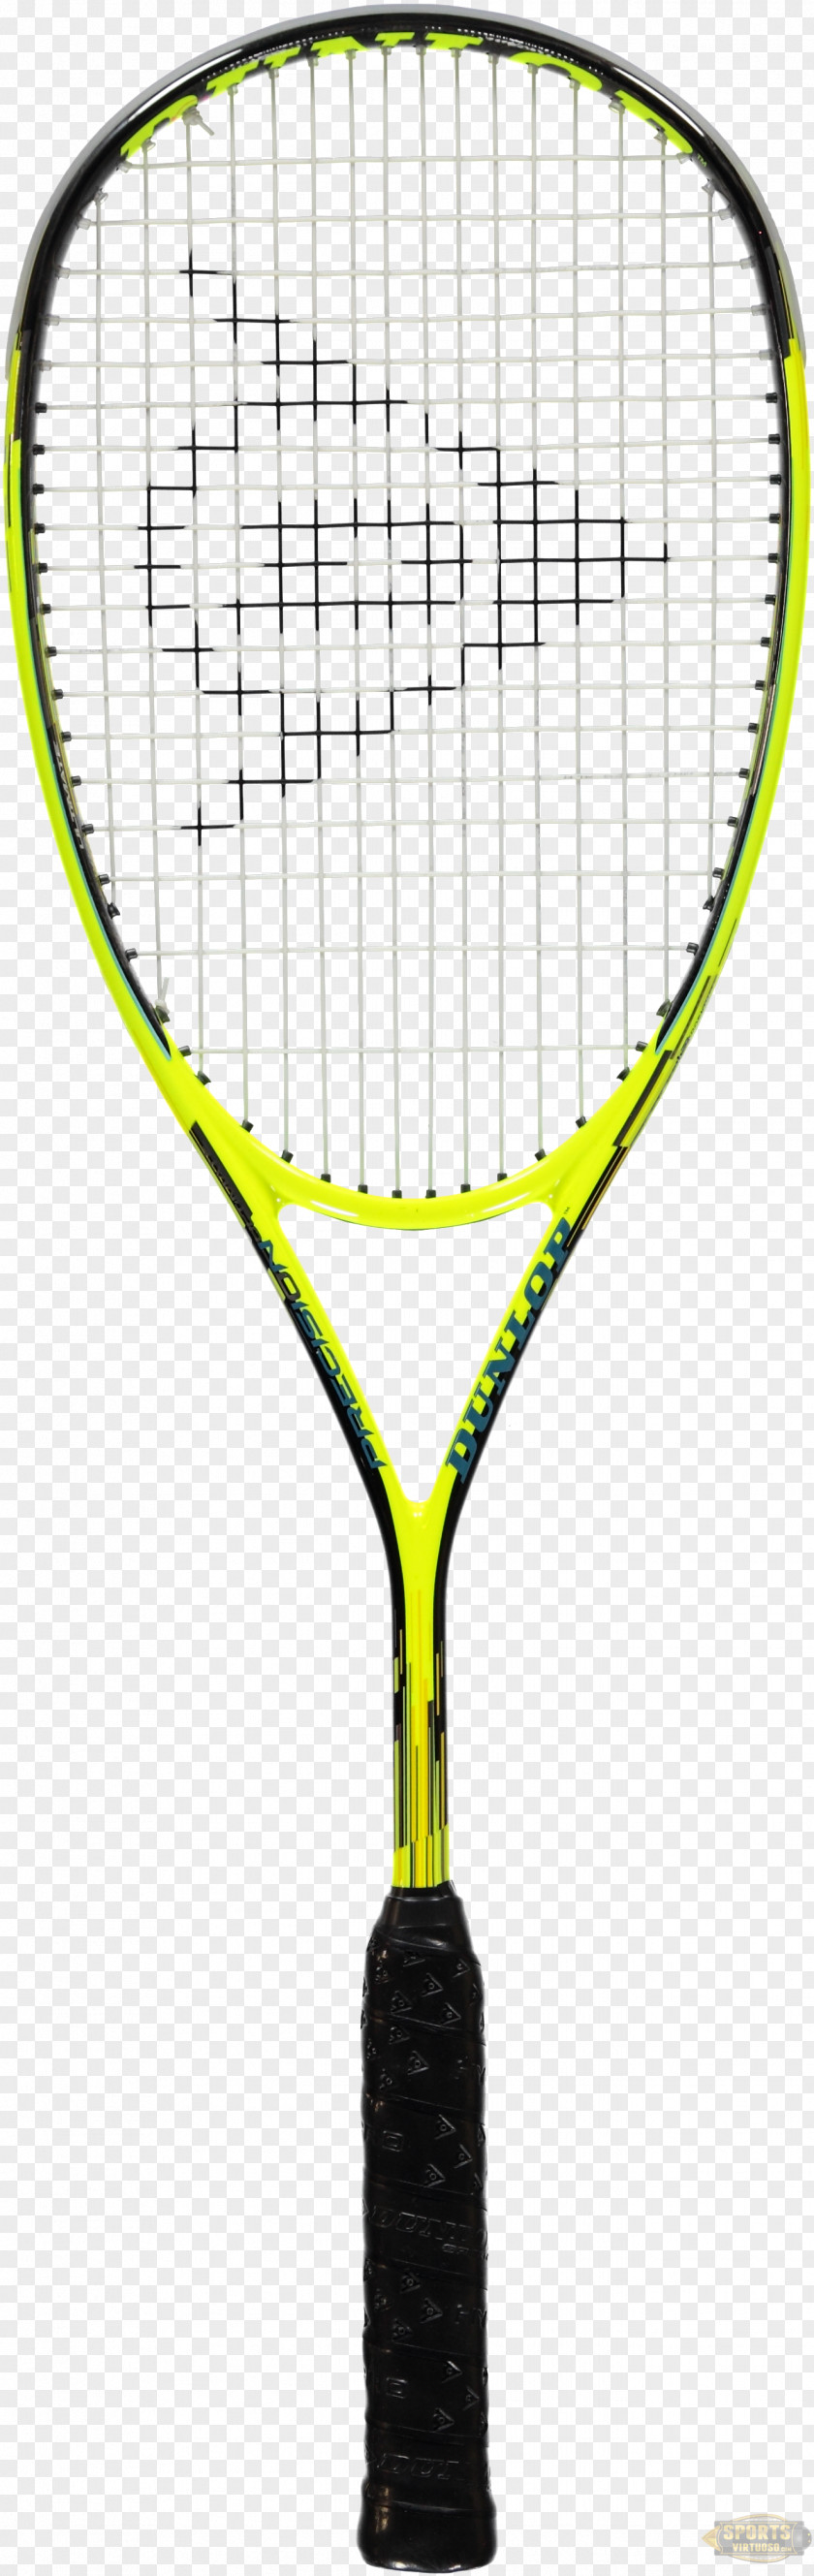 Cartoon Tennis Racket Rakieta Do Squasha Prince Sports Tenisowa PNG